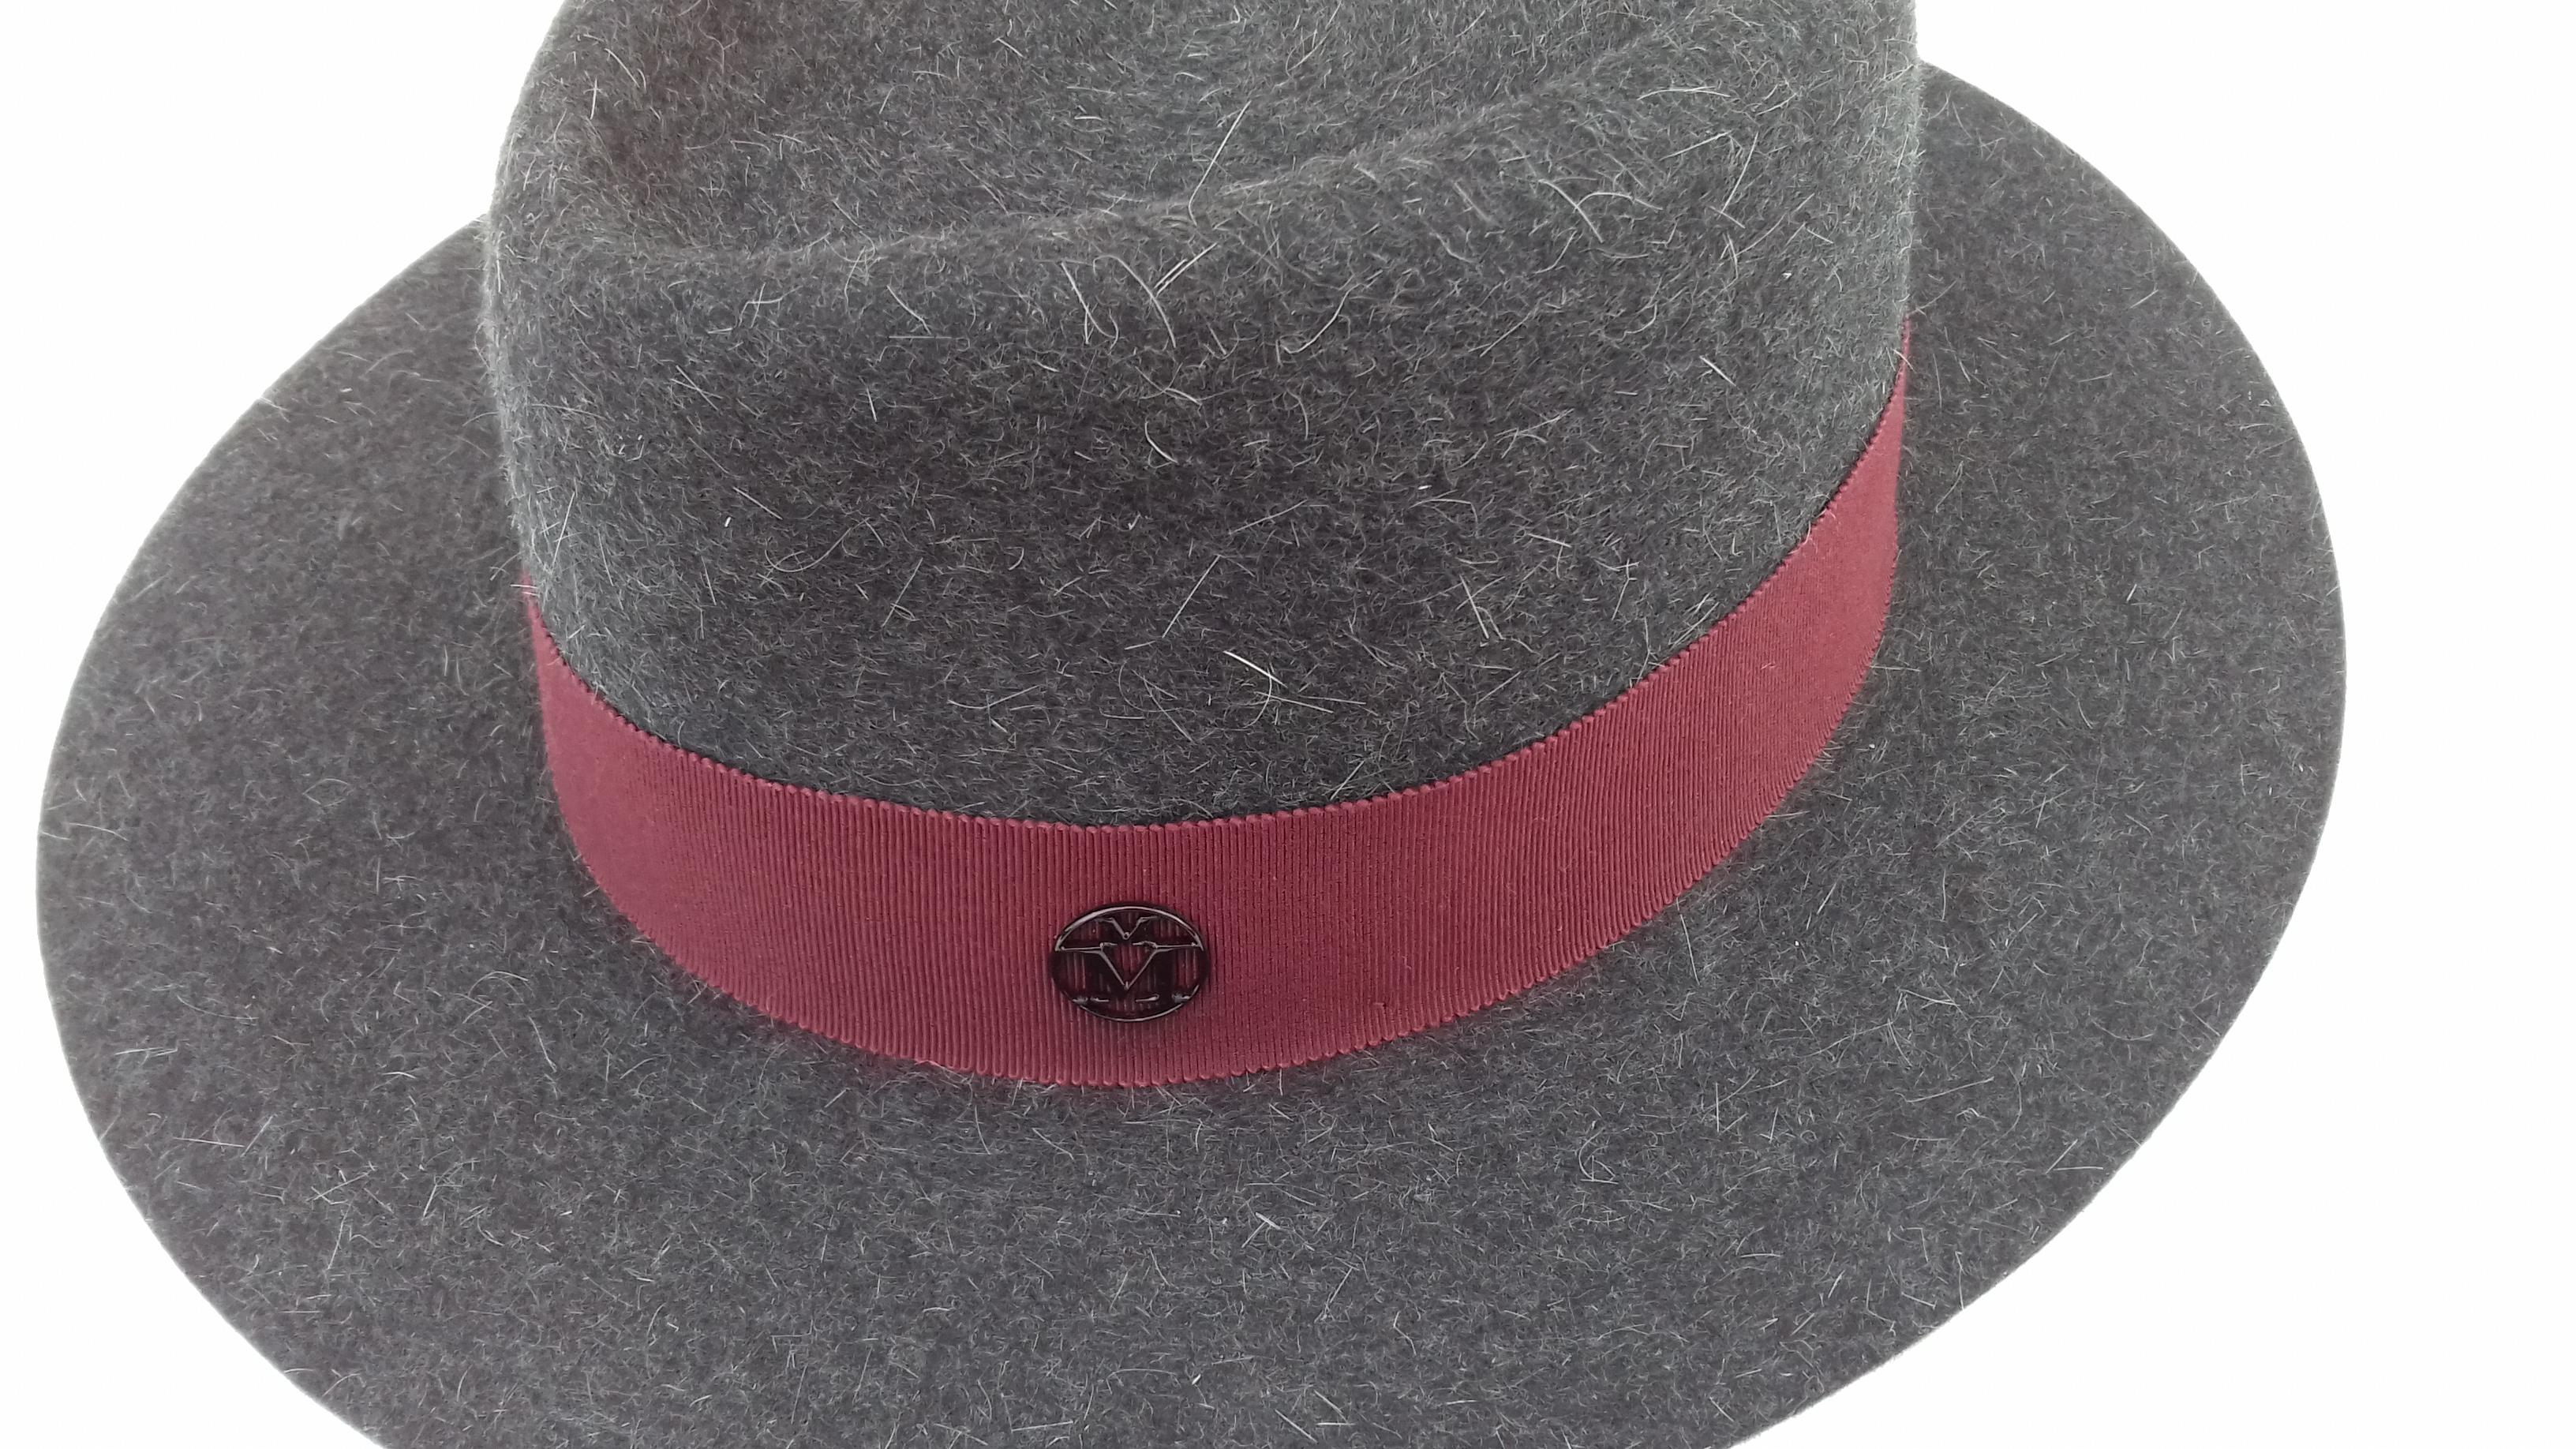 MAISON MICHEL Paris Andre Fedora Felt Hat in Charcoal Grey Size M For Sale 5